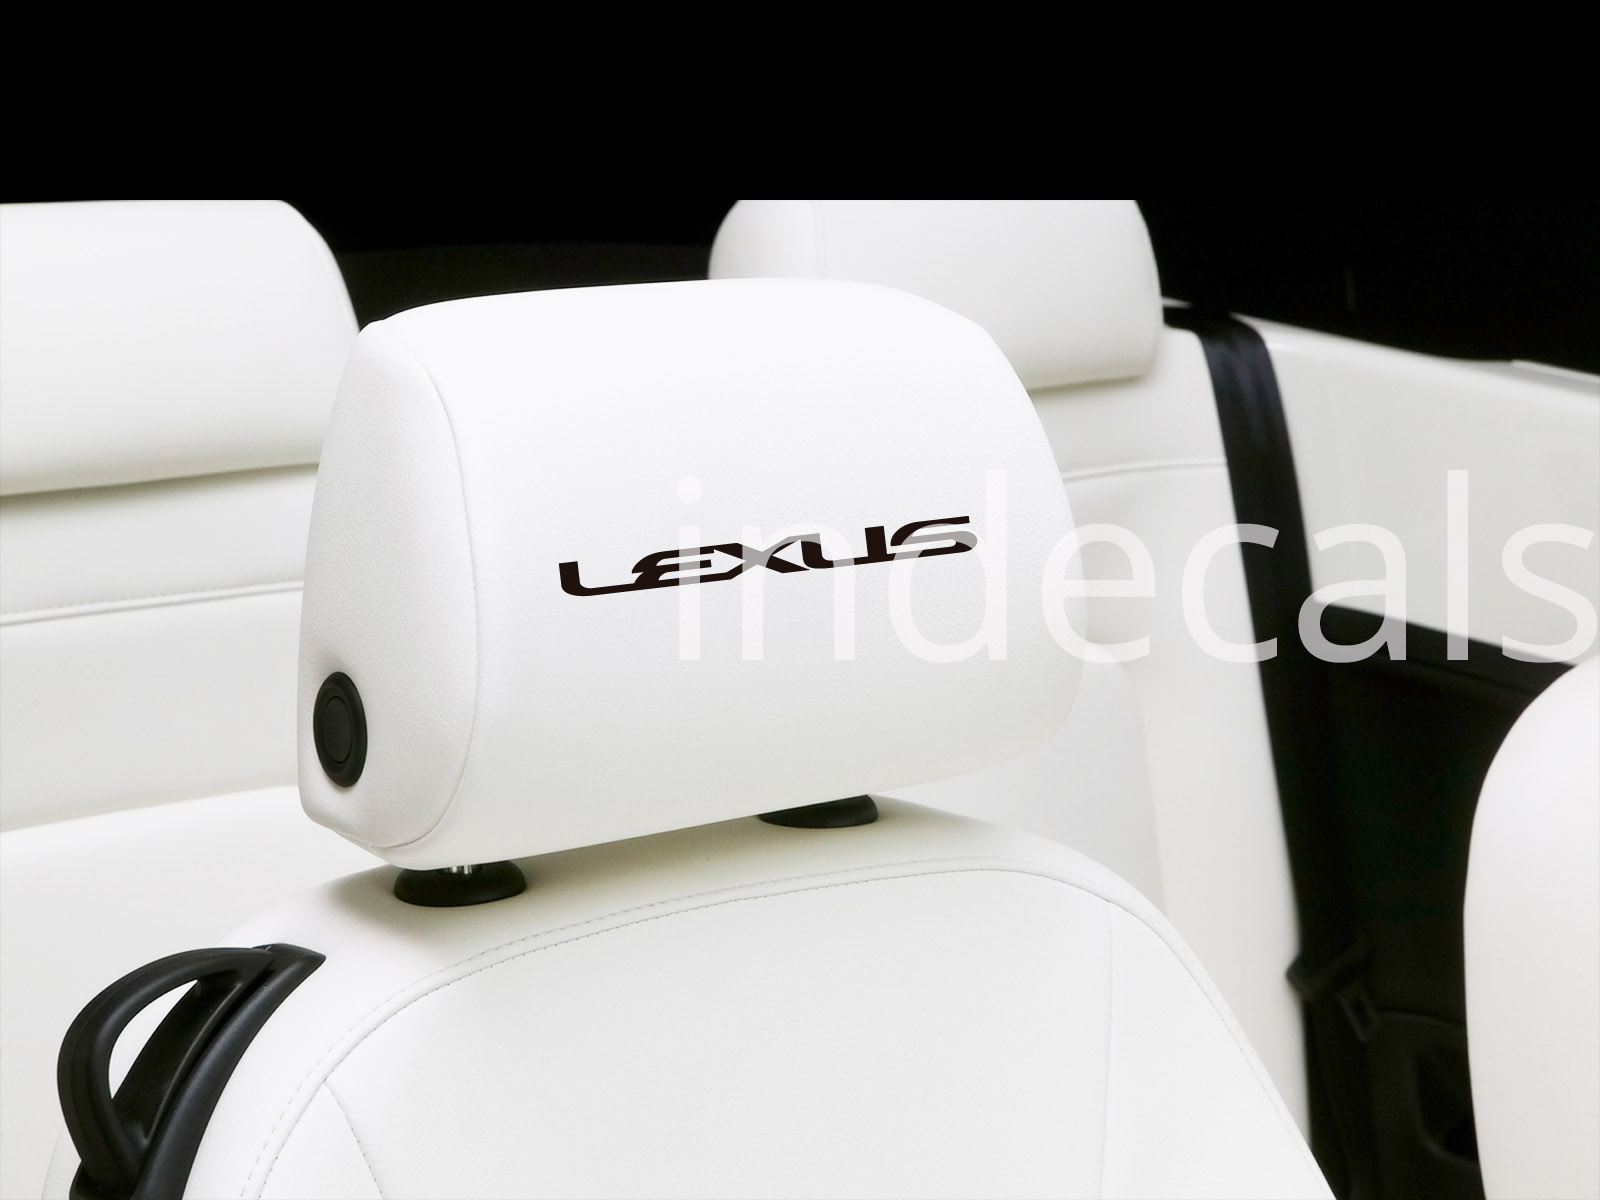 6 x Lexus Stickers for Headrests - Black